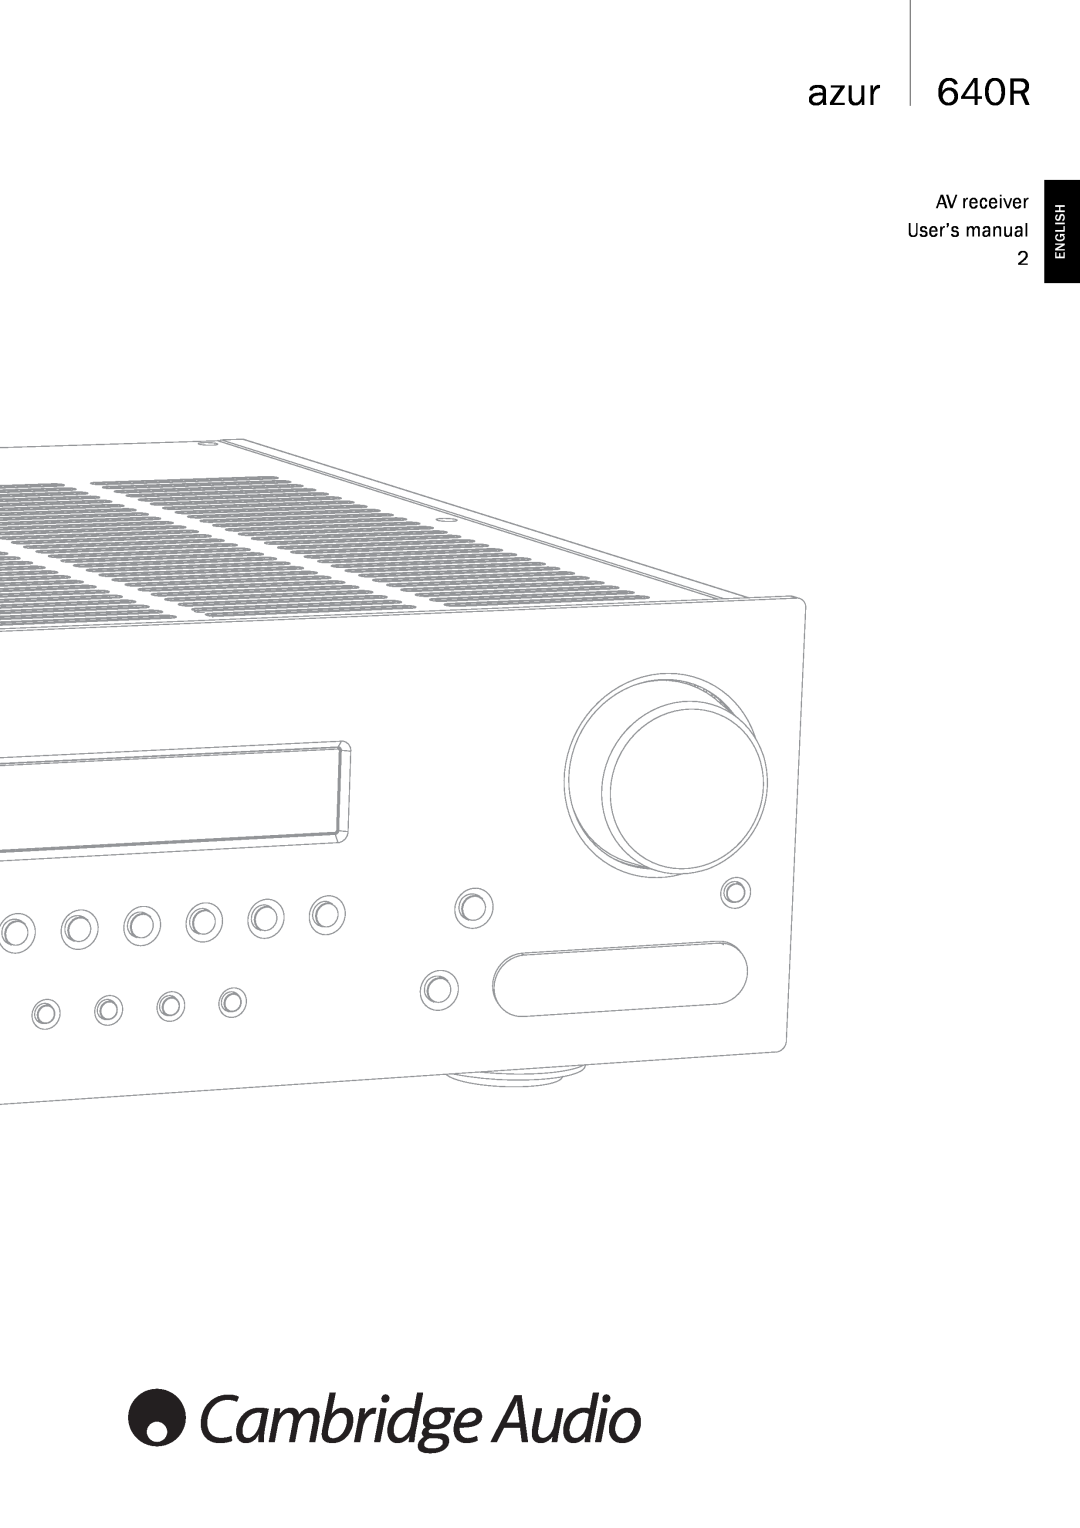 Cambridge Audio 640Razur user manual azur 640R, AV receiver User’s manual, English 